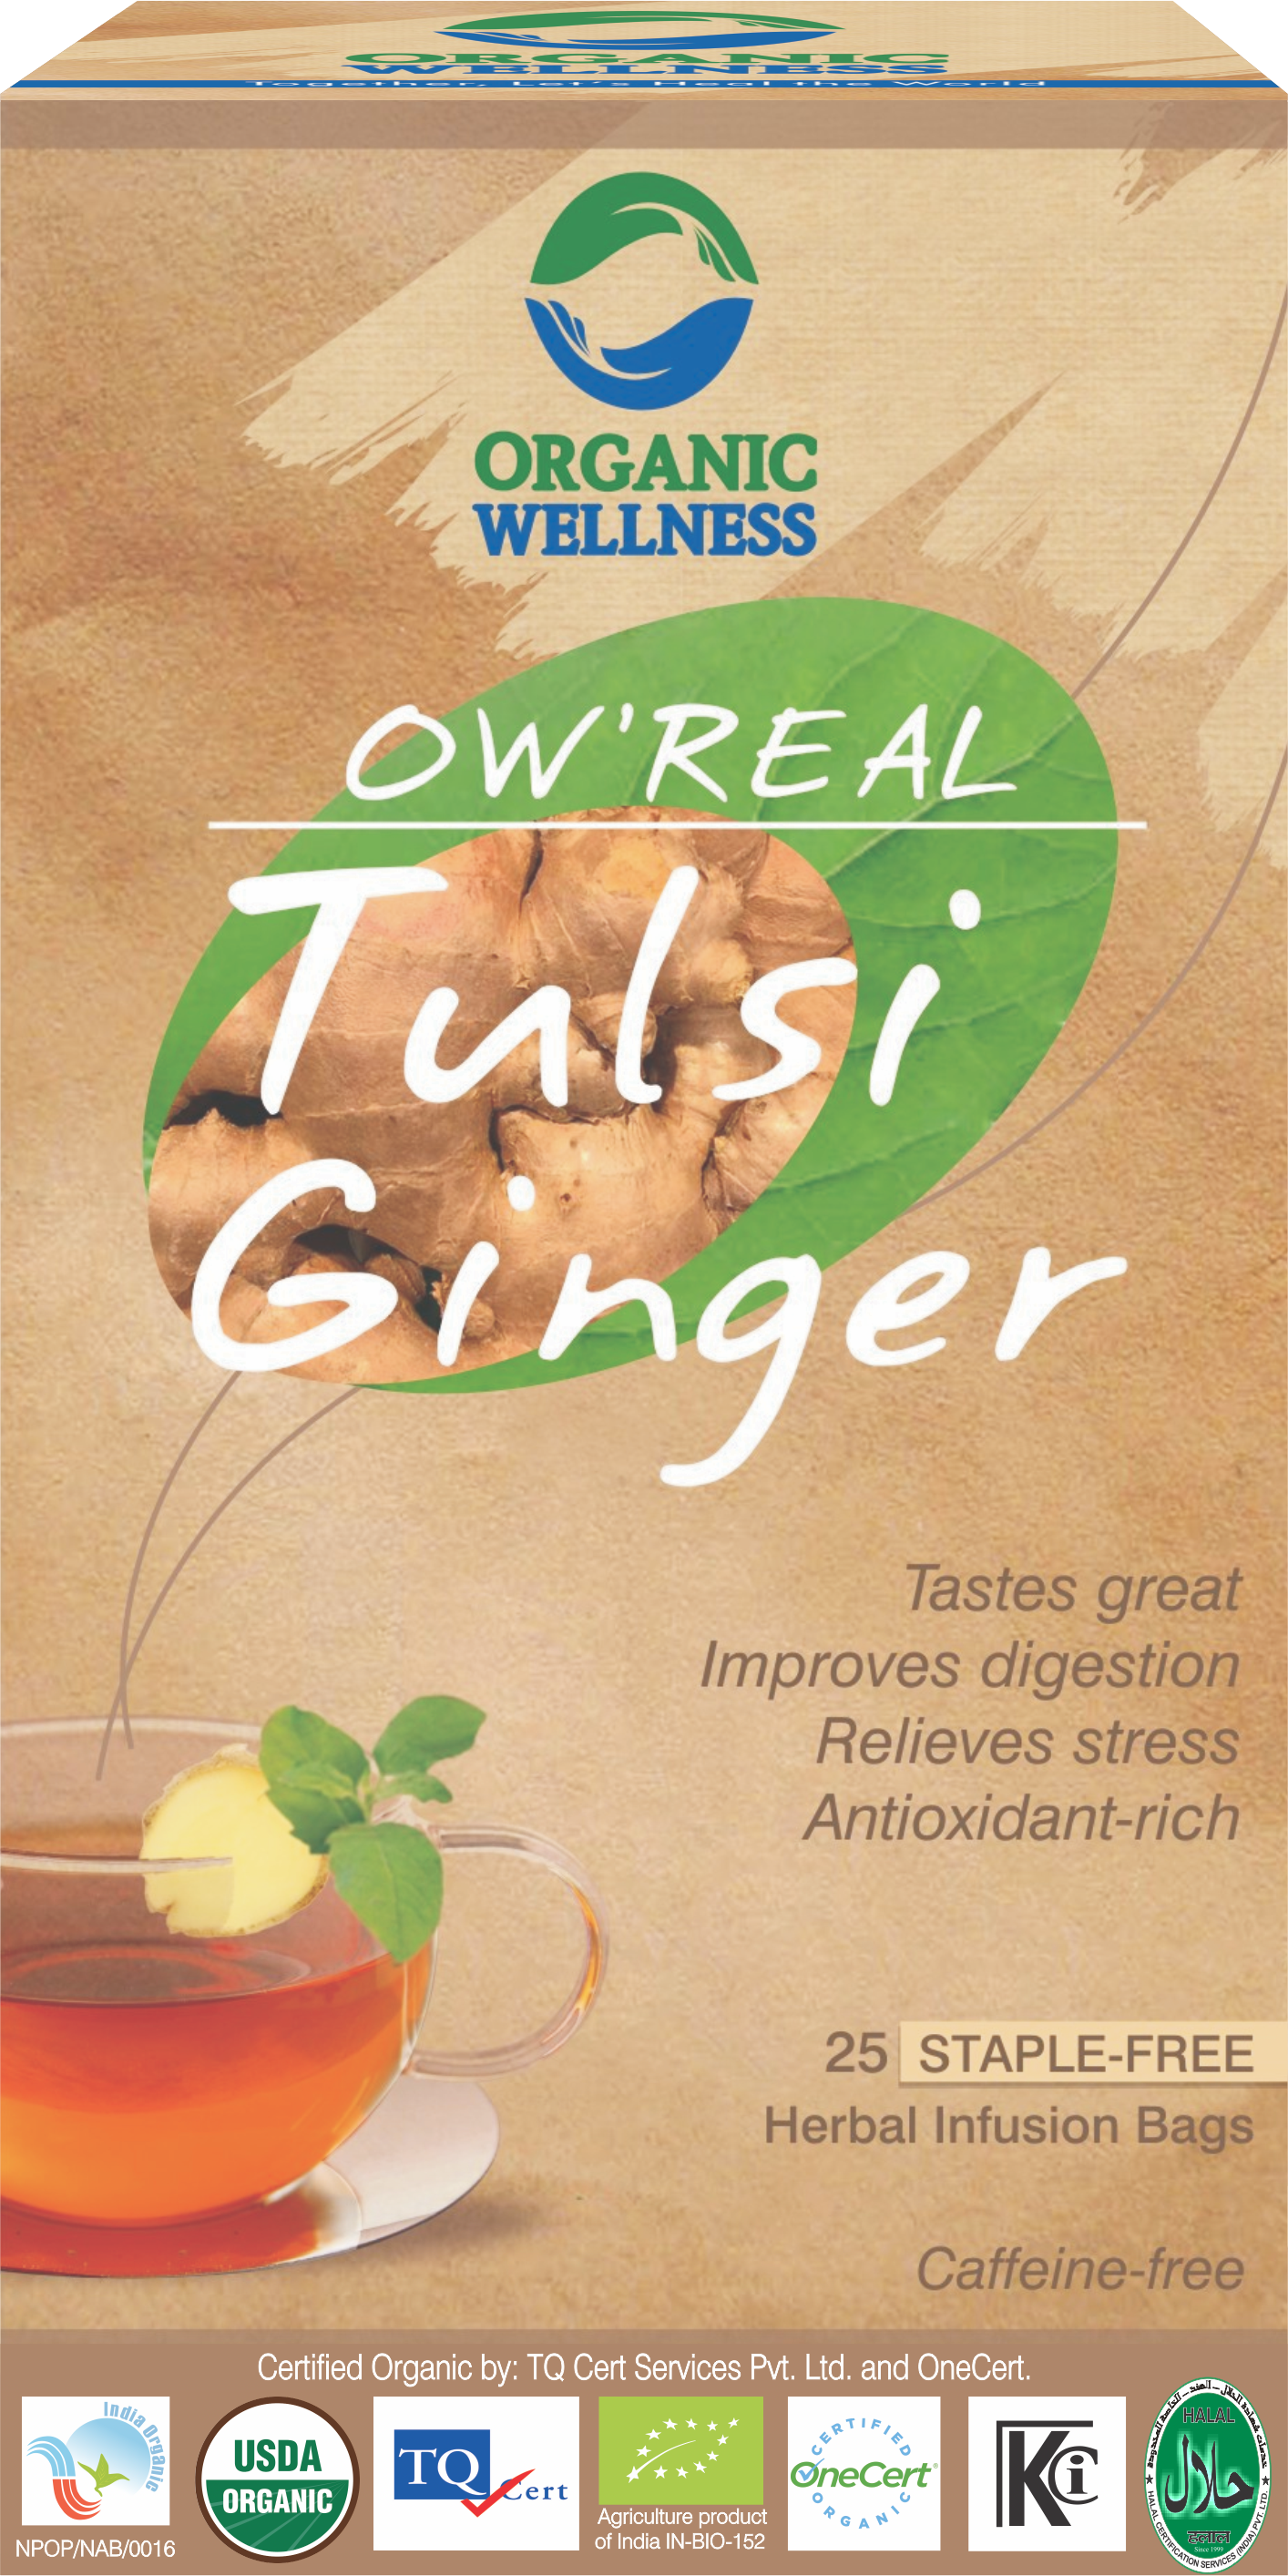 Buy Organic Wellness Real Tulsi Ginger Tea at Best Price Online